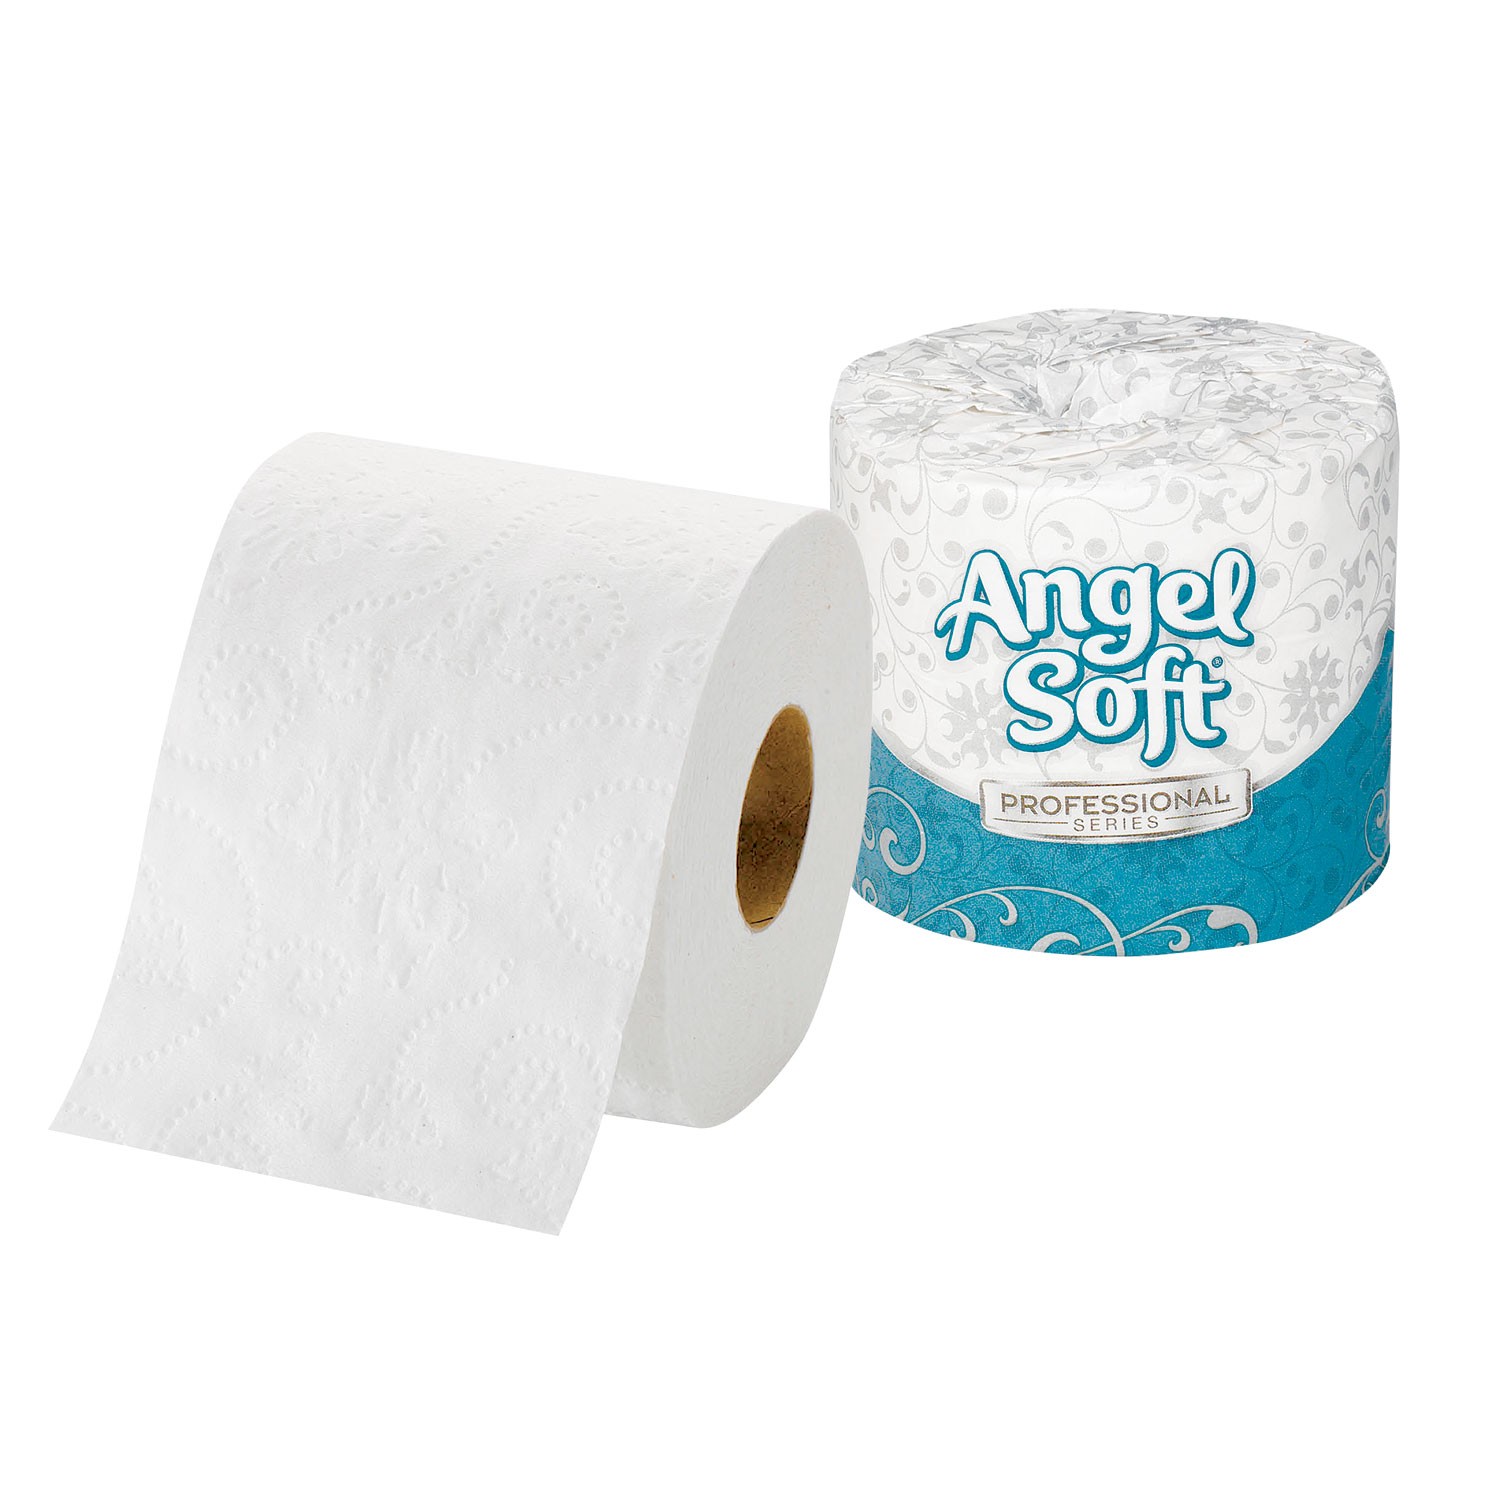  Georgia Pacific Professional 16840 Angel Soft ps Premium Bathroom Tissue, Septic Safe, 2-Ply, White, 450 Sheets/Roll, 40 Rolls/Carton (GPC16840) 